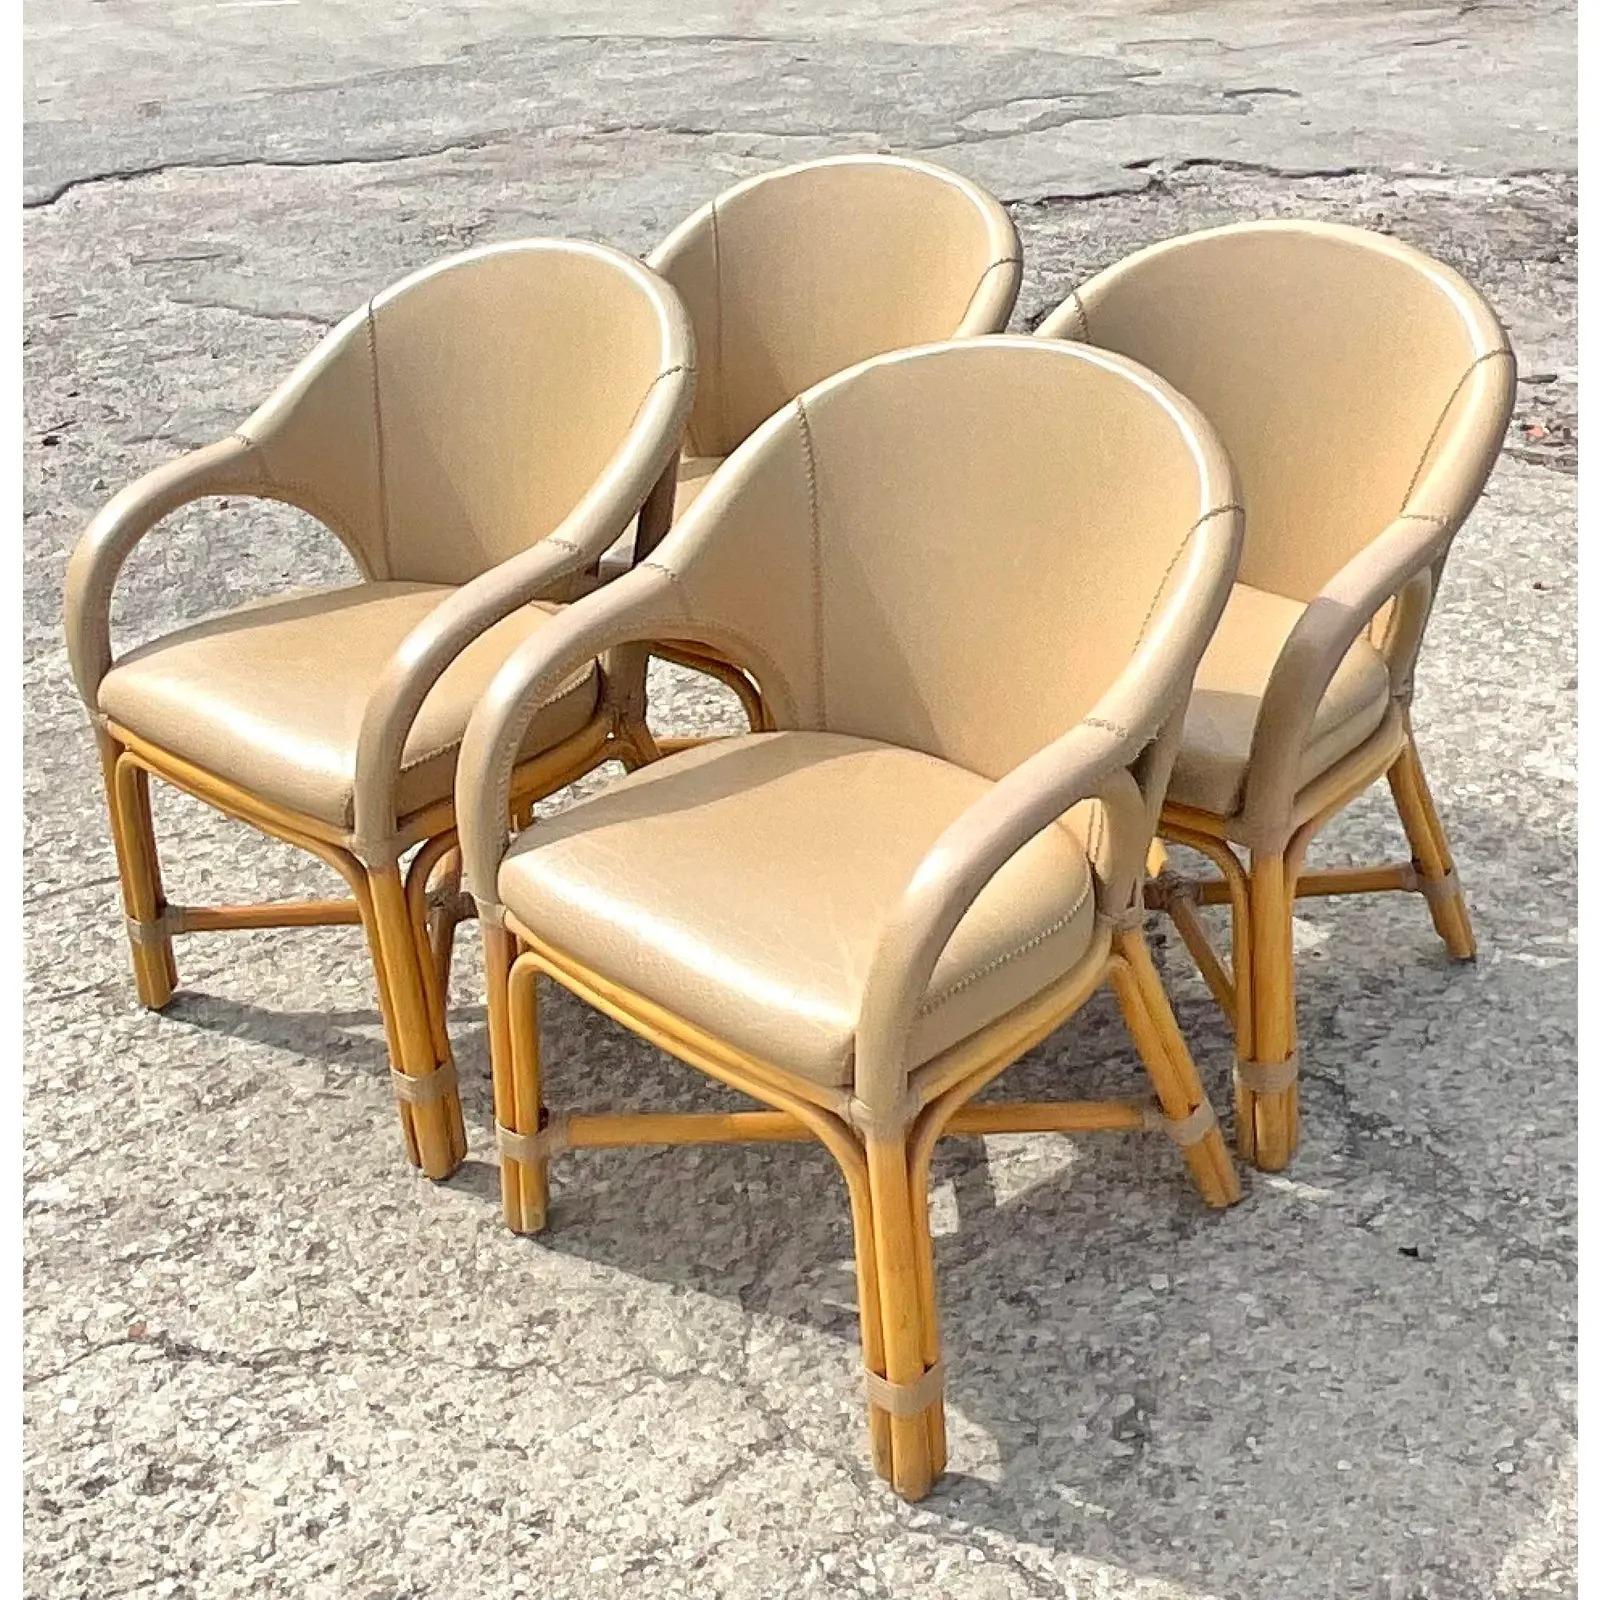 Philippine Vintage Coastal Antonio Budji Leather and Rattan Dining Chairs, Set of 4